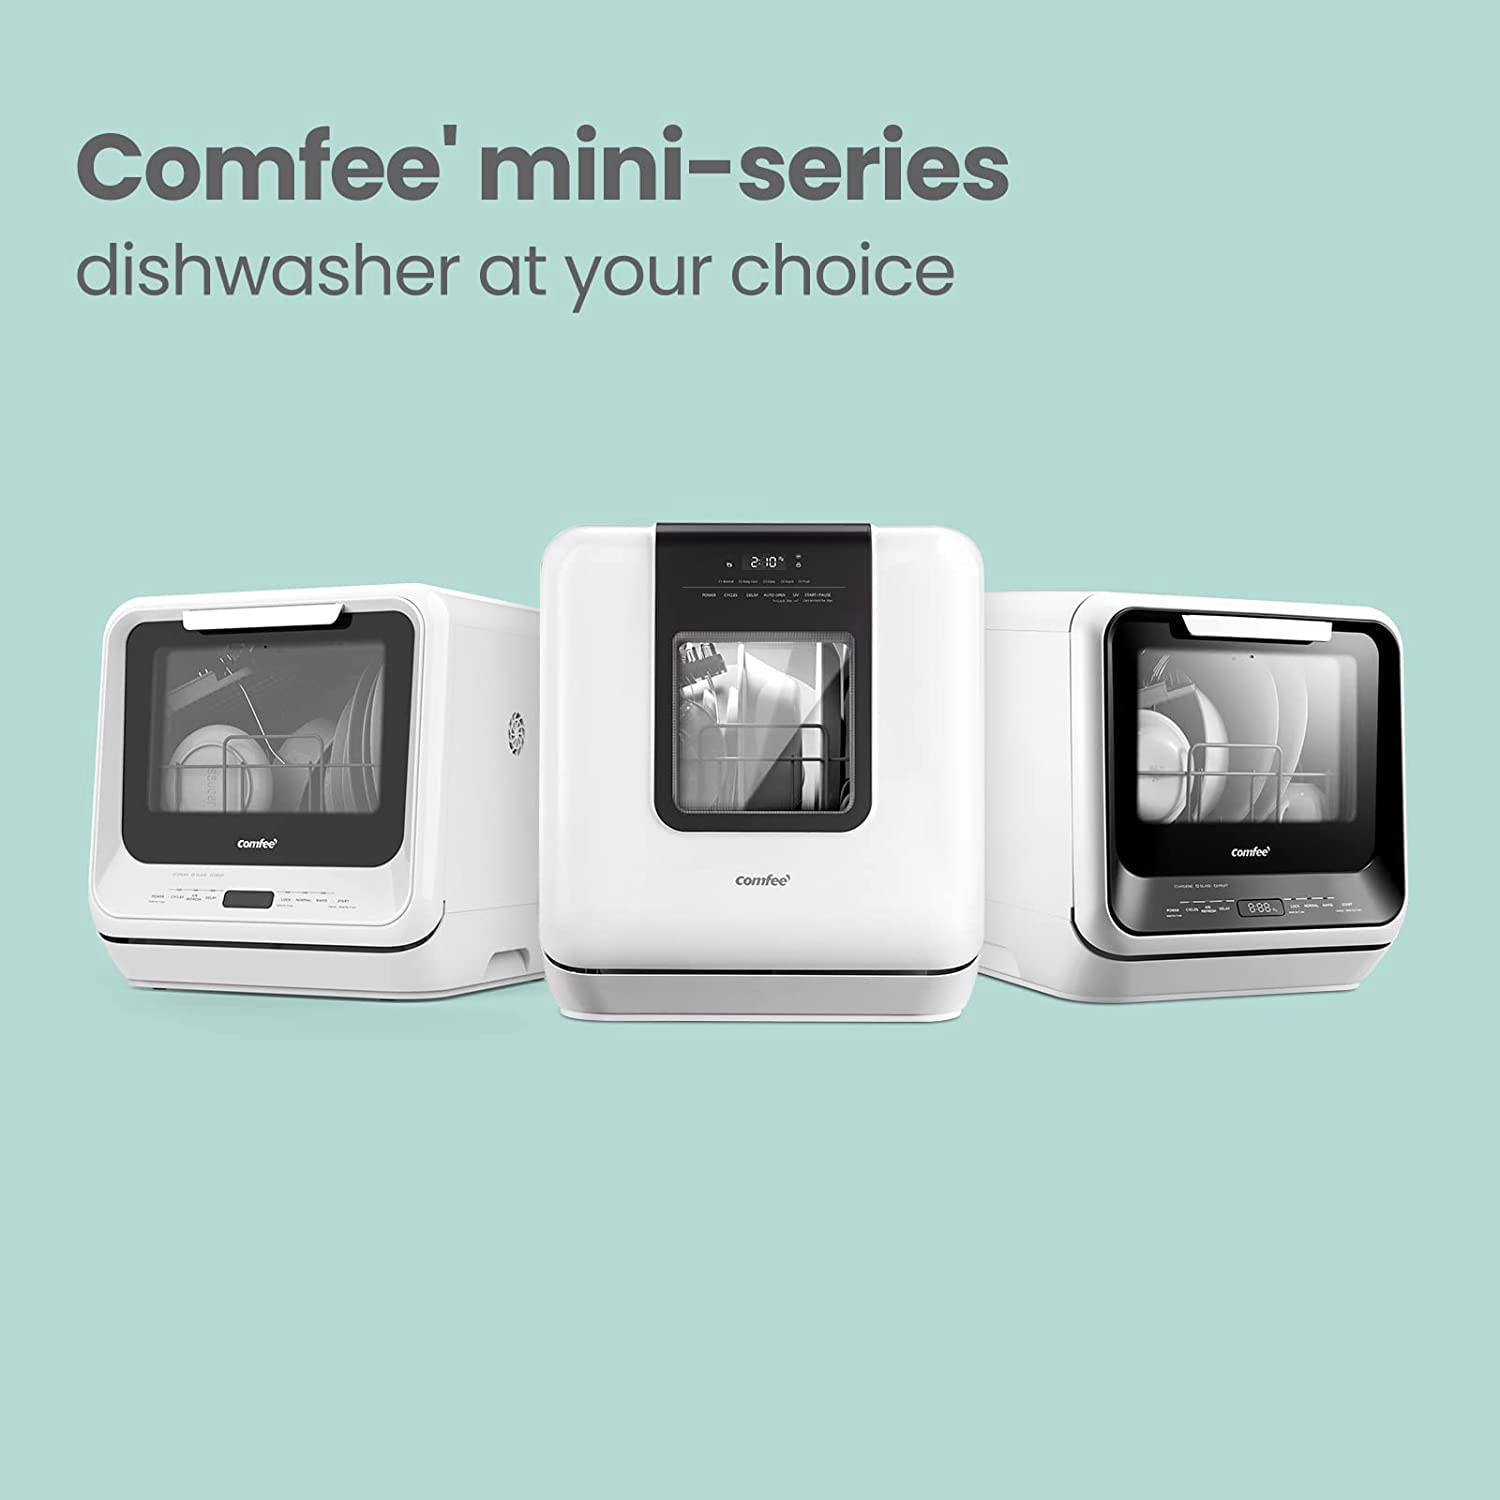 Comfee 16.5-in Portable Countertop Dishwasher (White), 62-dBA in